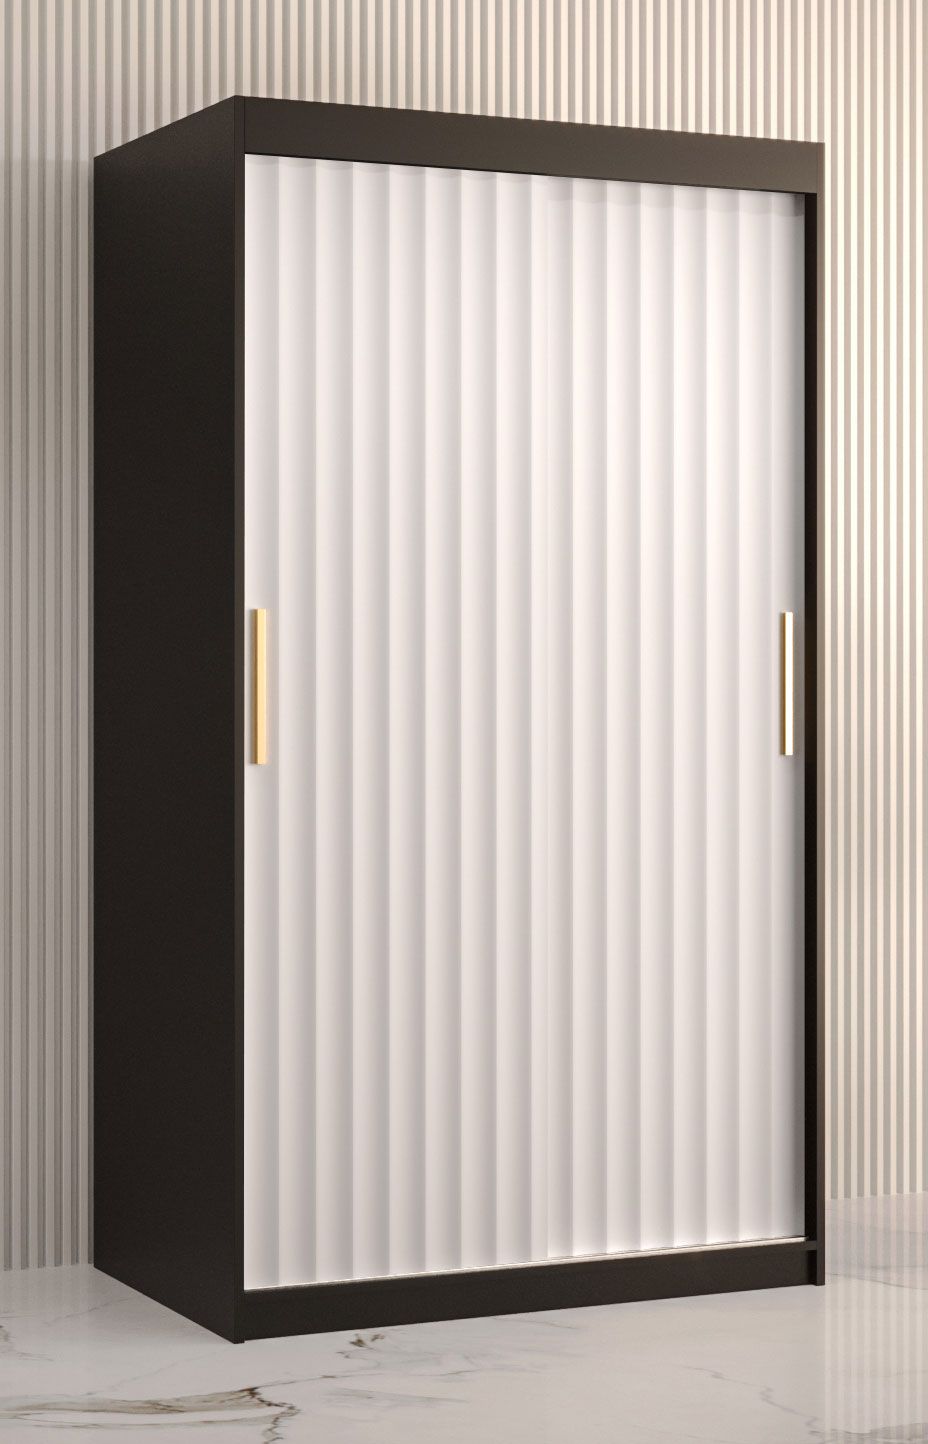 Kledingkast met vijf vakken Balmenhorn 51, kleur: mat zwart / mat wit - afmetingen: 200 x 100 x 62 cm (H x B x D), met voldoende opbergruimte